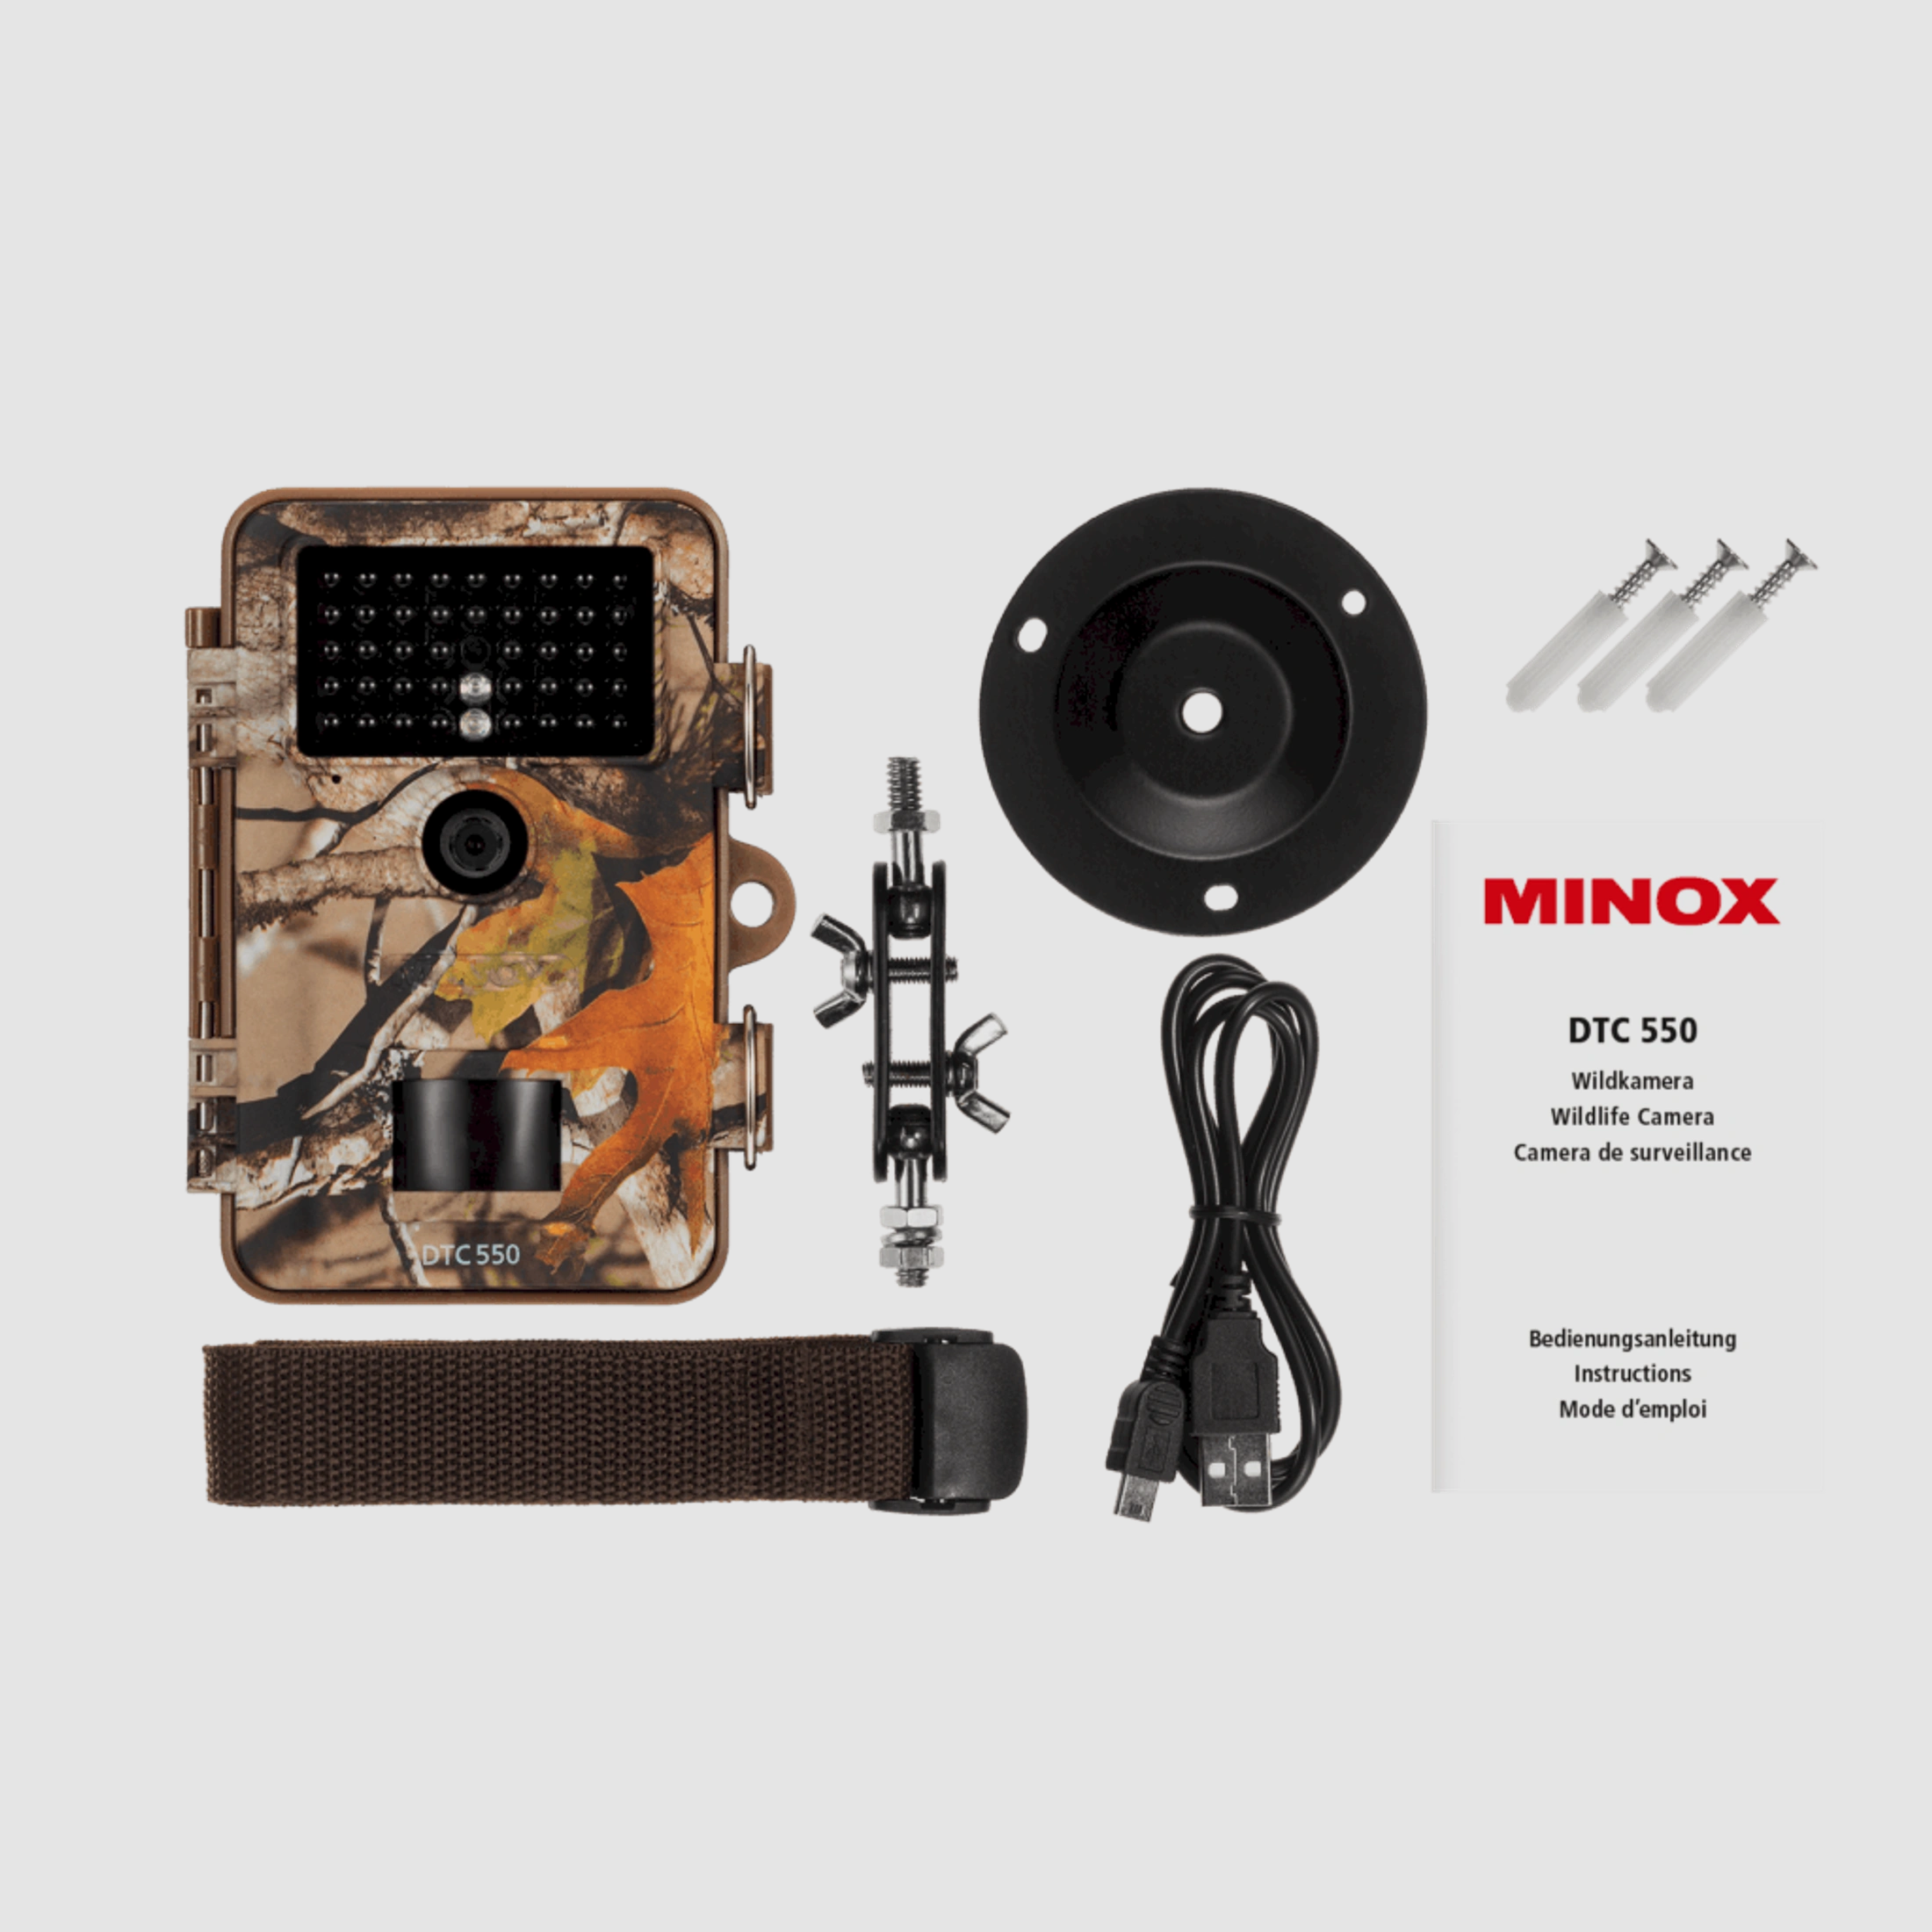 MINOX DTC 550 WiFi Wildkamera